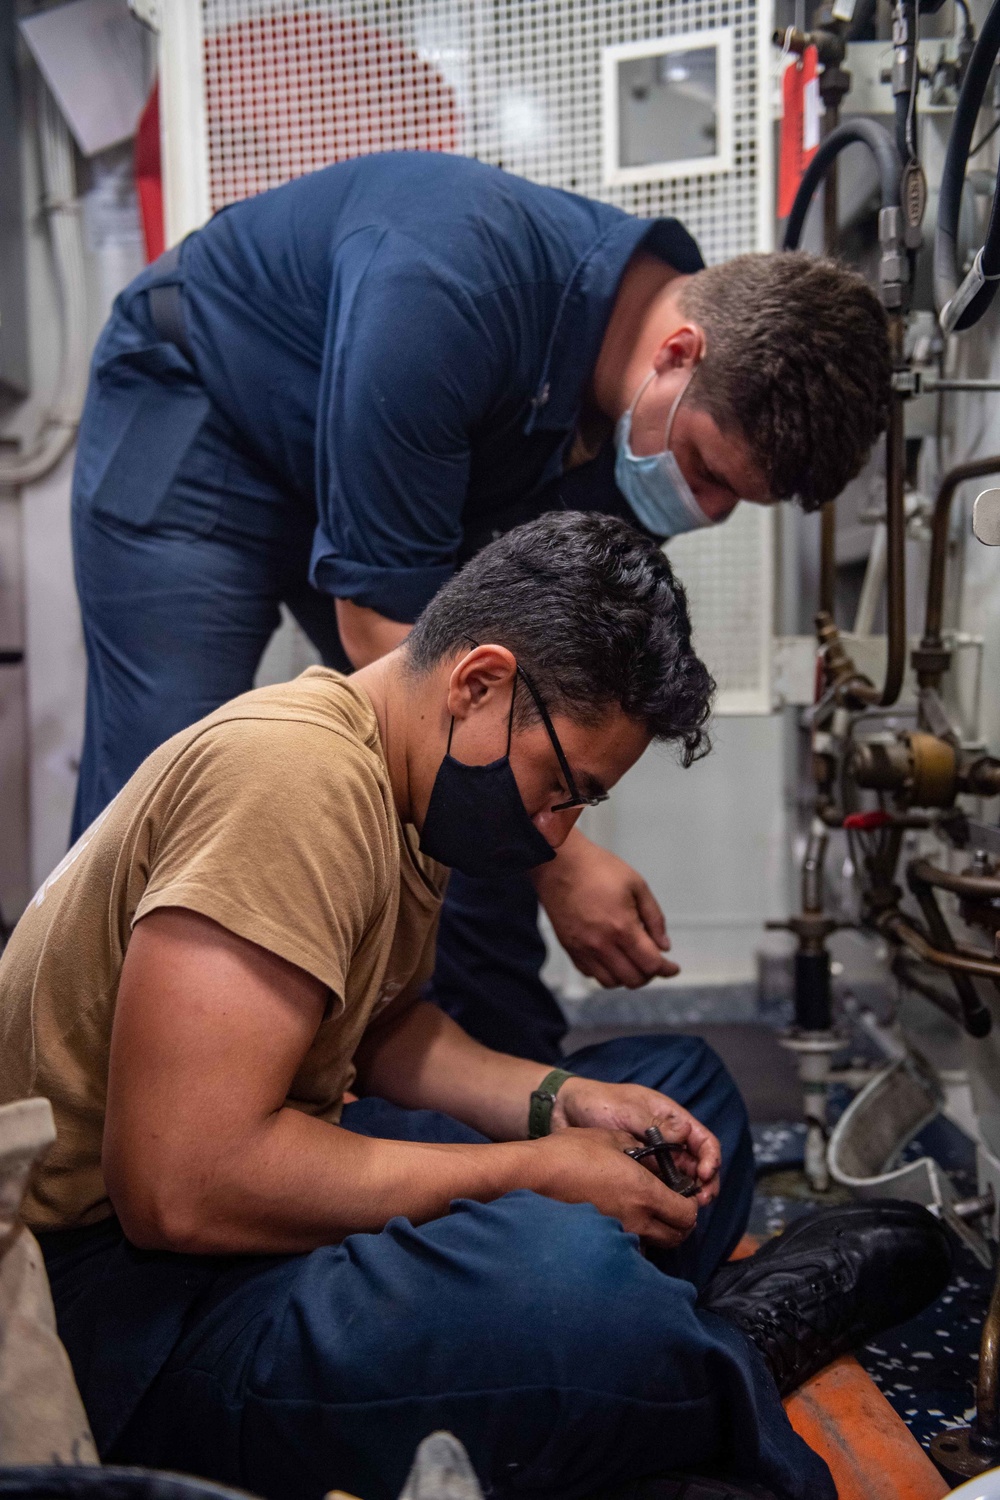 Gunner’s Mate Conducts Maintenance of the Magazine Sprinkler Aboard USS Michael Murphy (DDG 112)